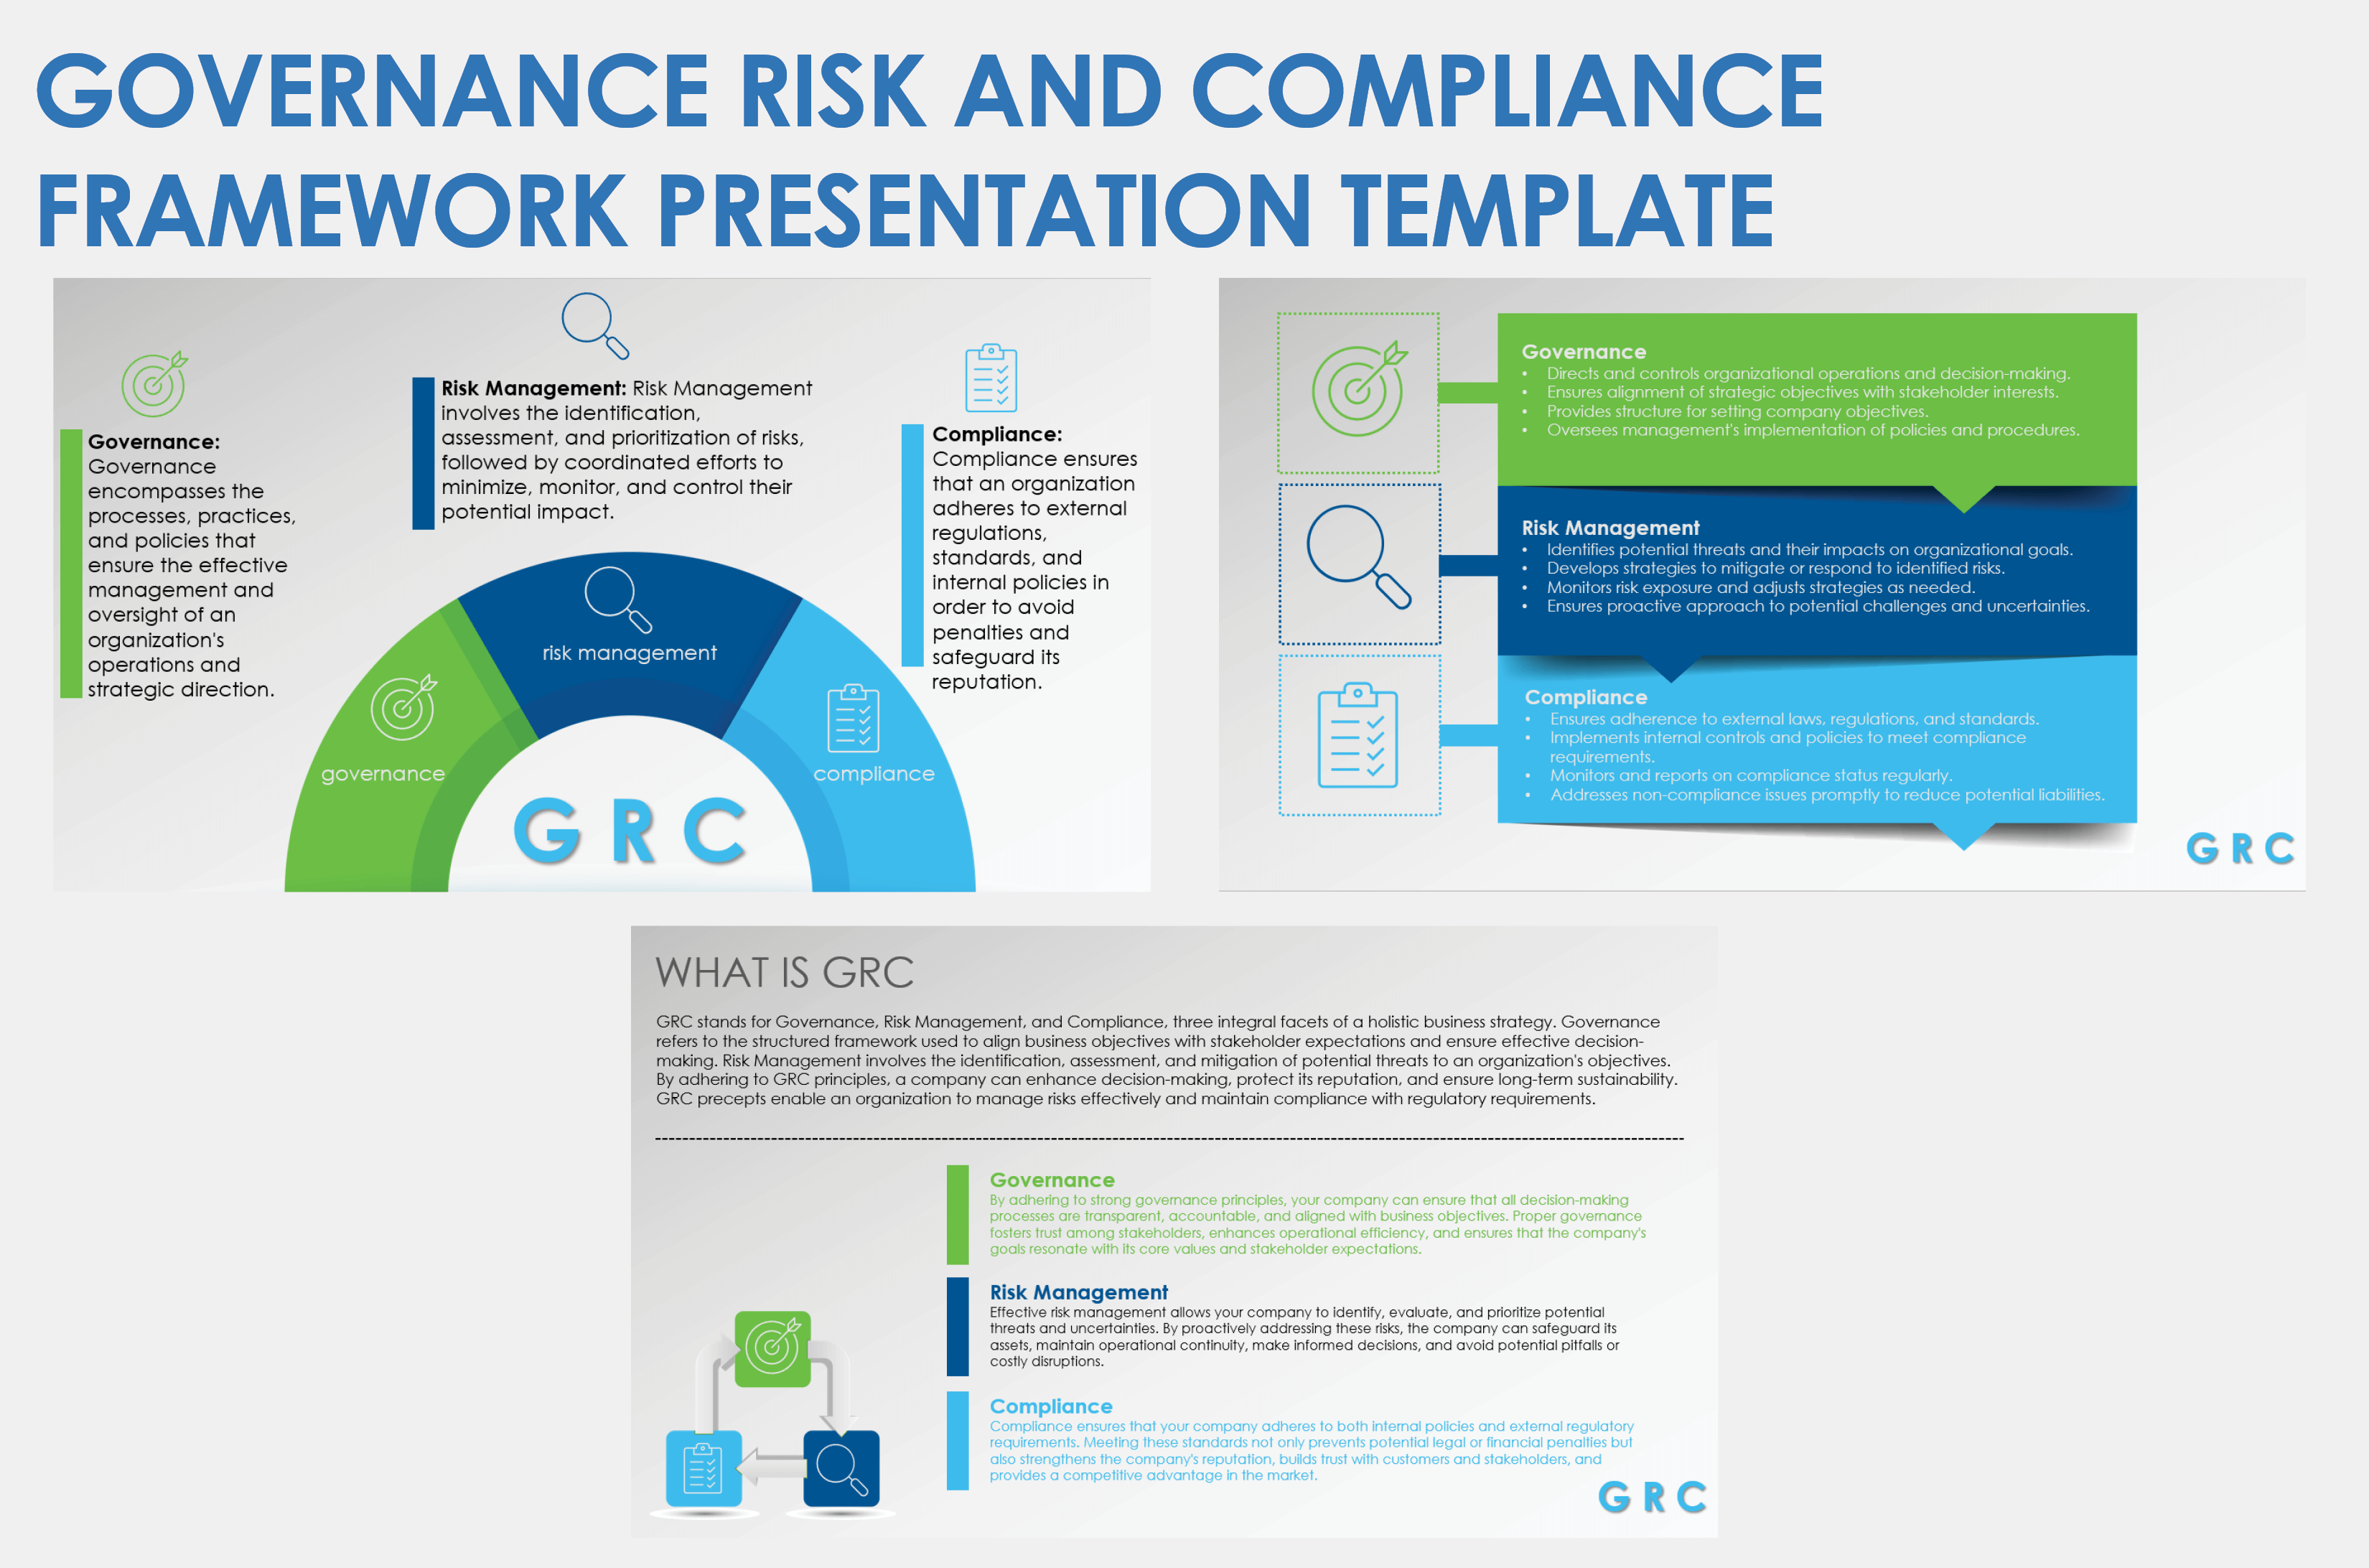 Governance Risk and Compliance (GRC) Framework Presentation Template